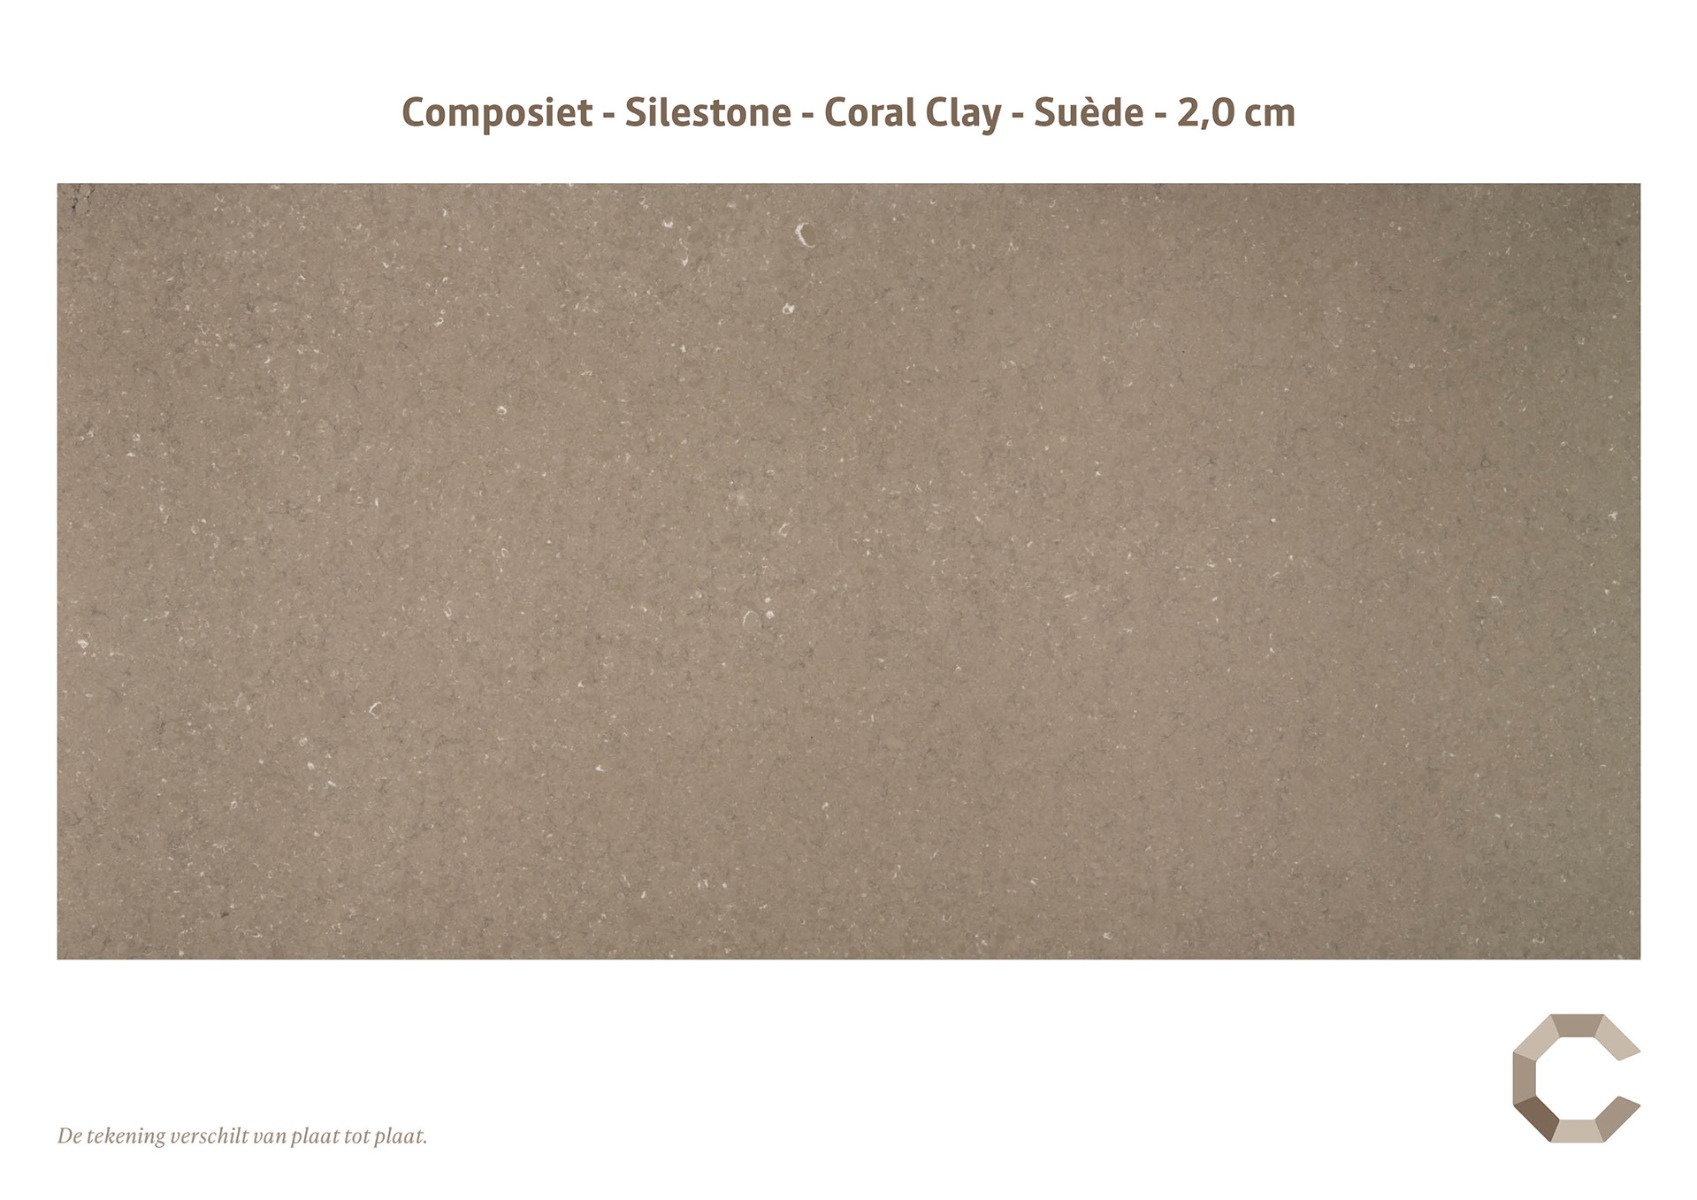 Composiet_-_Silestone_-_Coral_Clay_-_Suede